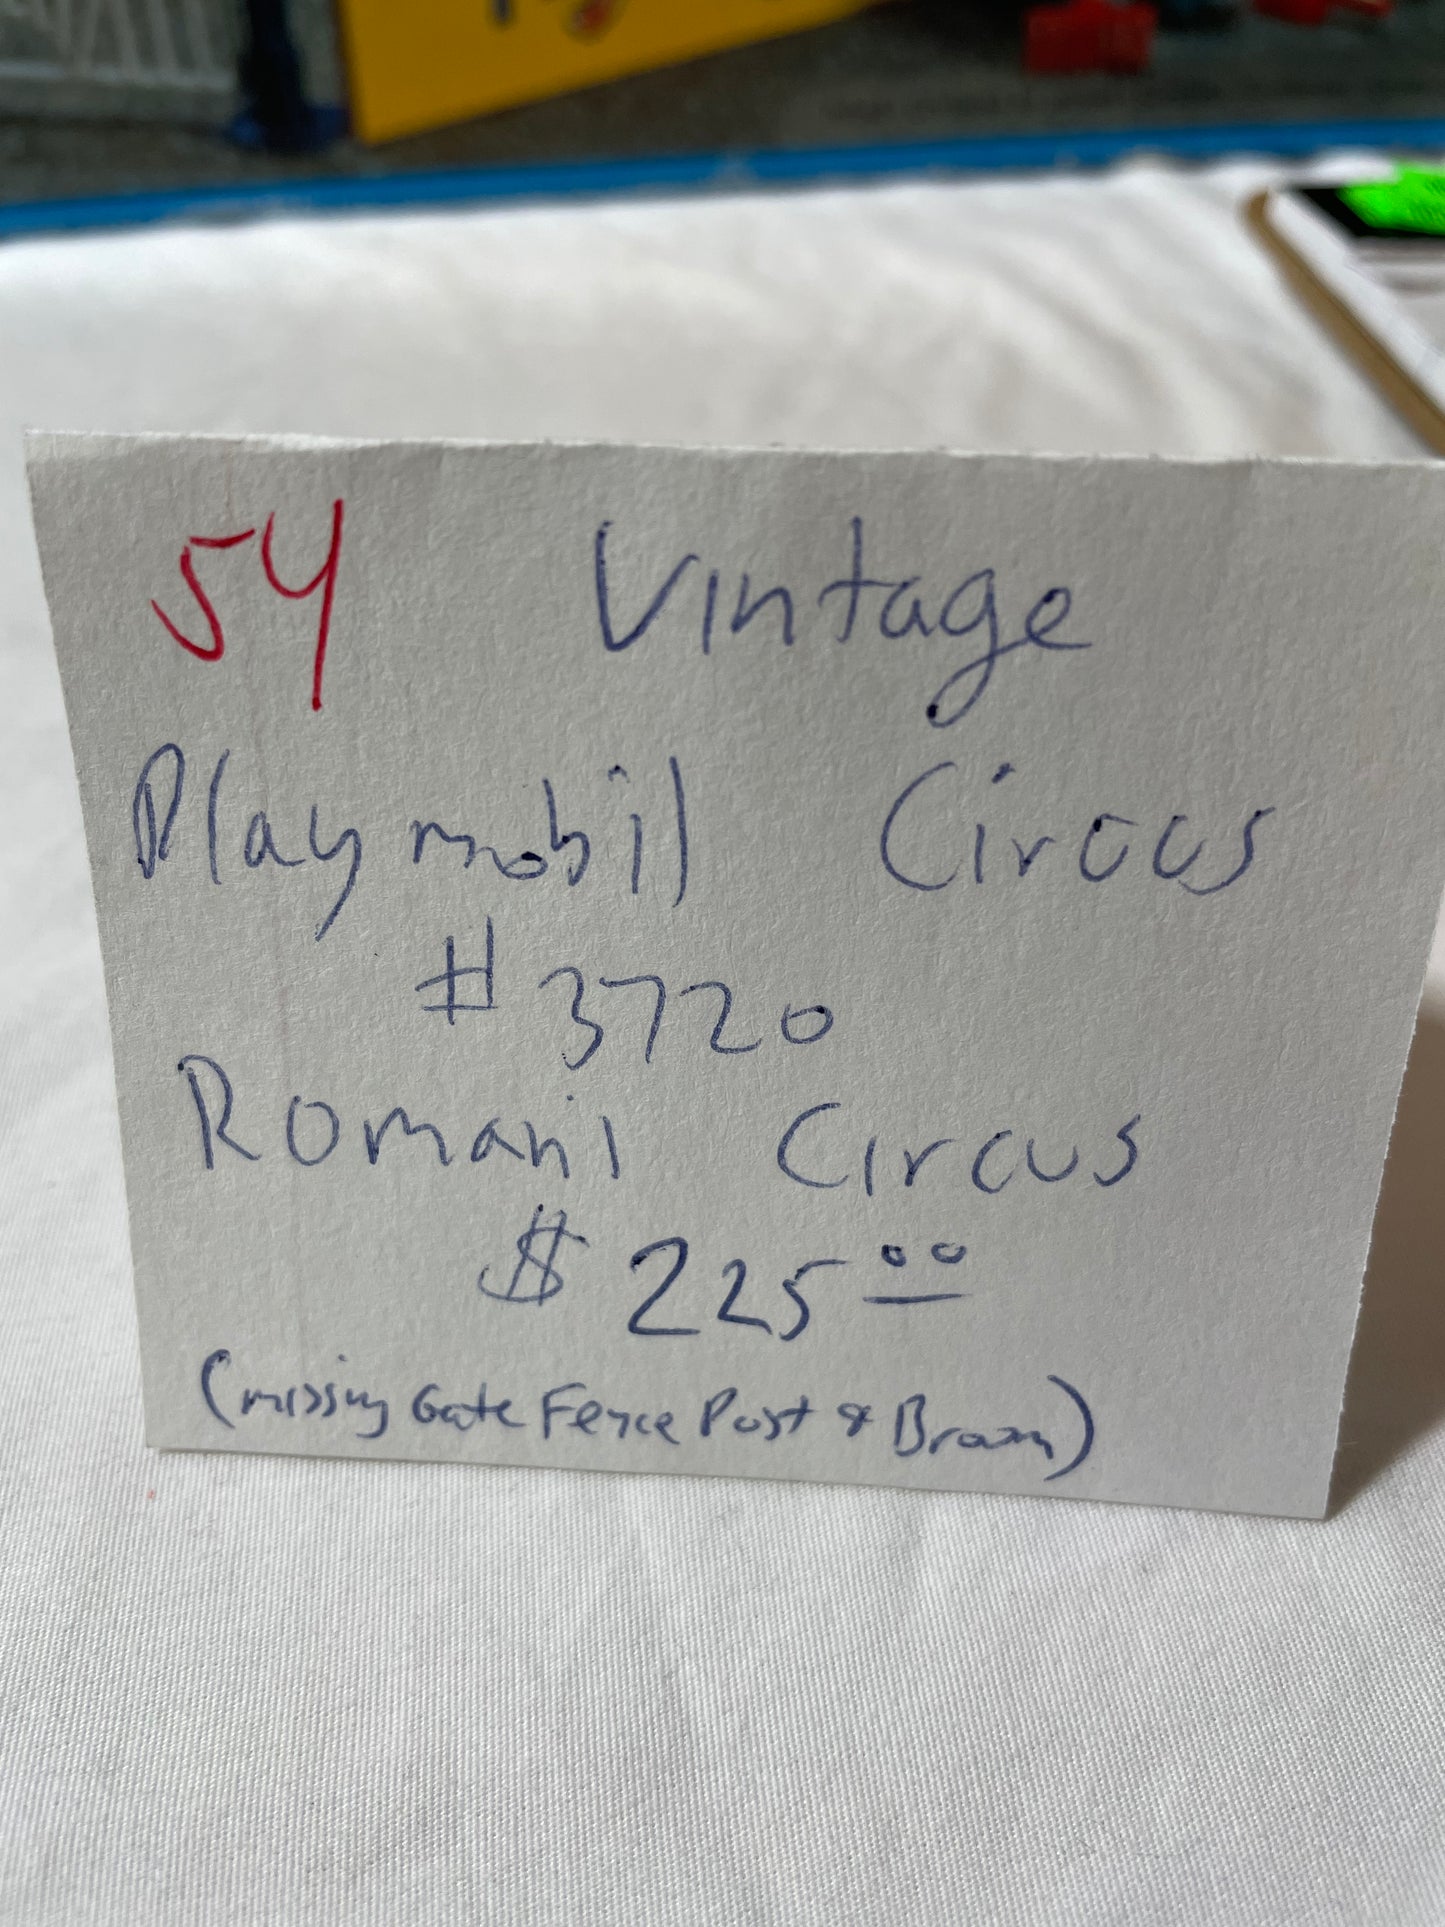 Playmobil - Romani Circus #3720 1992 #100193